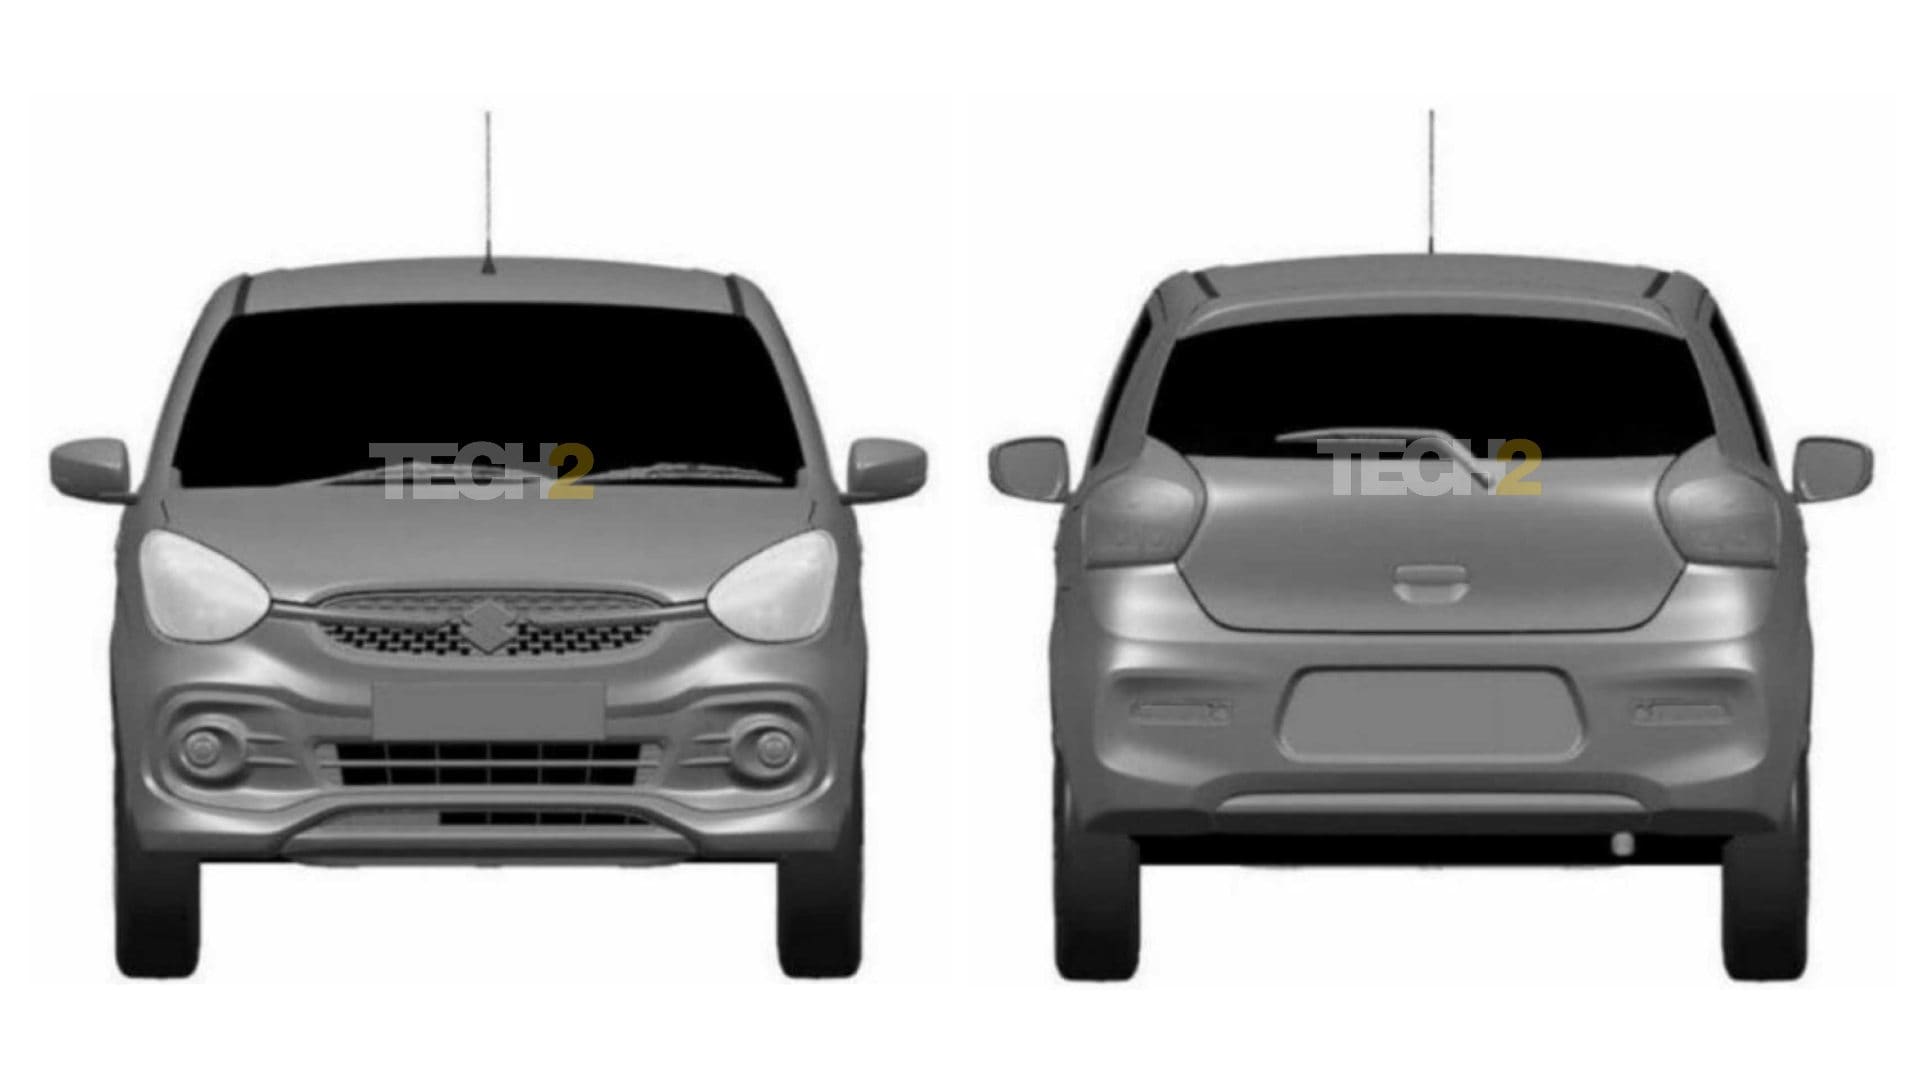 The 2021 Maruti Suzuki Celerio will sport sweptback headlights and a small mesh grille.